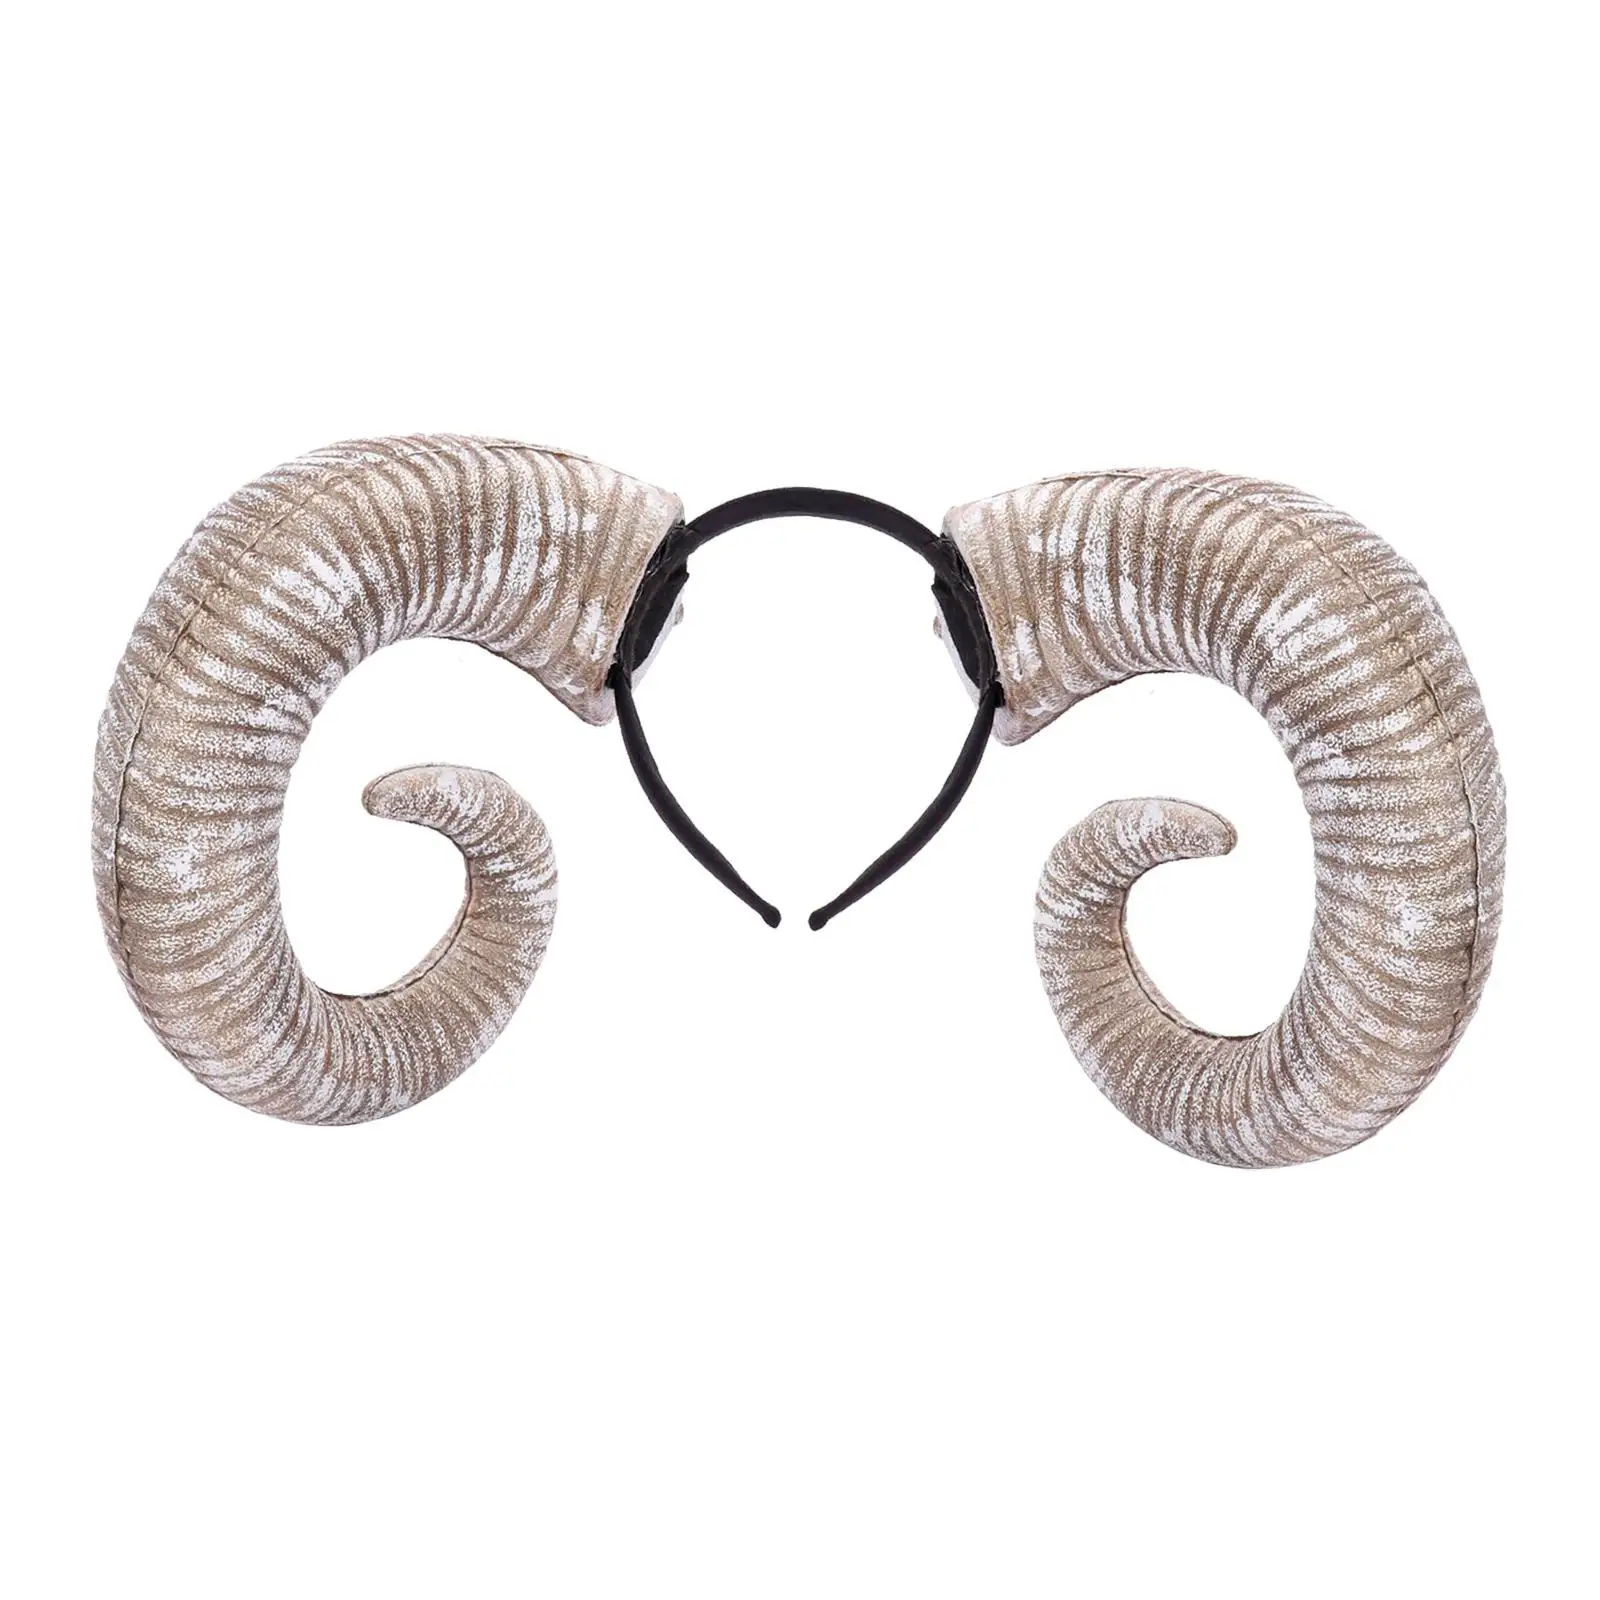 Devil Horns Hair Band Headband Headpiece for Stage Performance Christmas